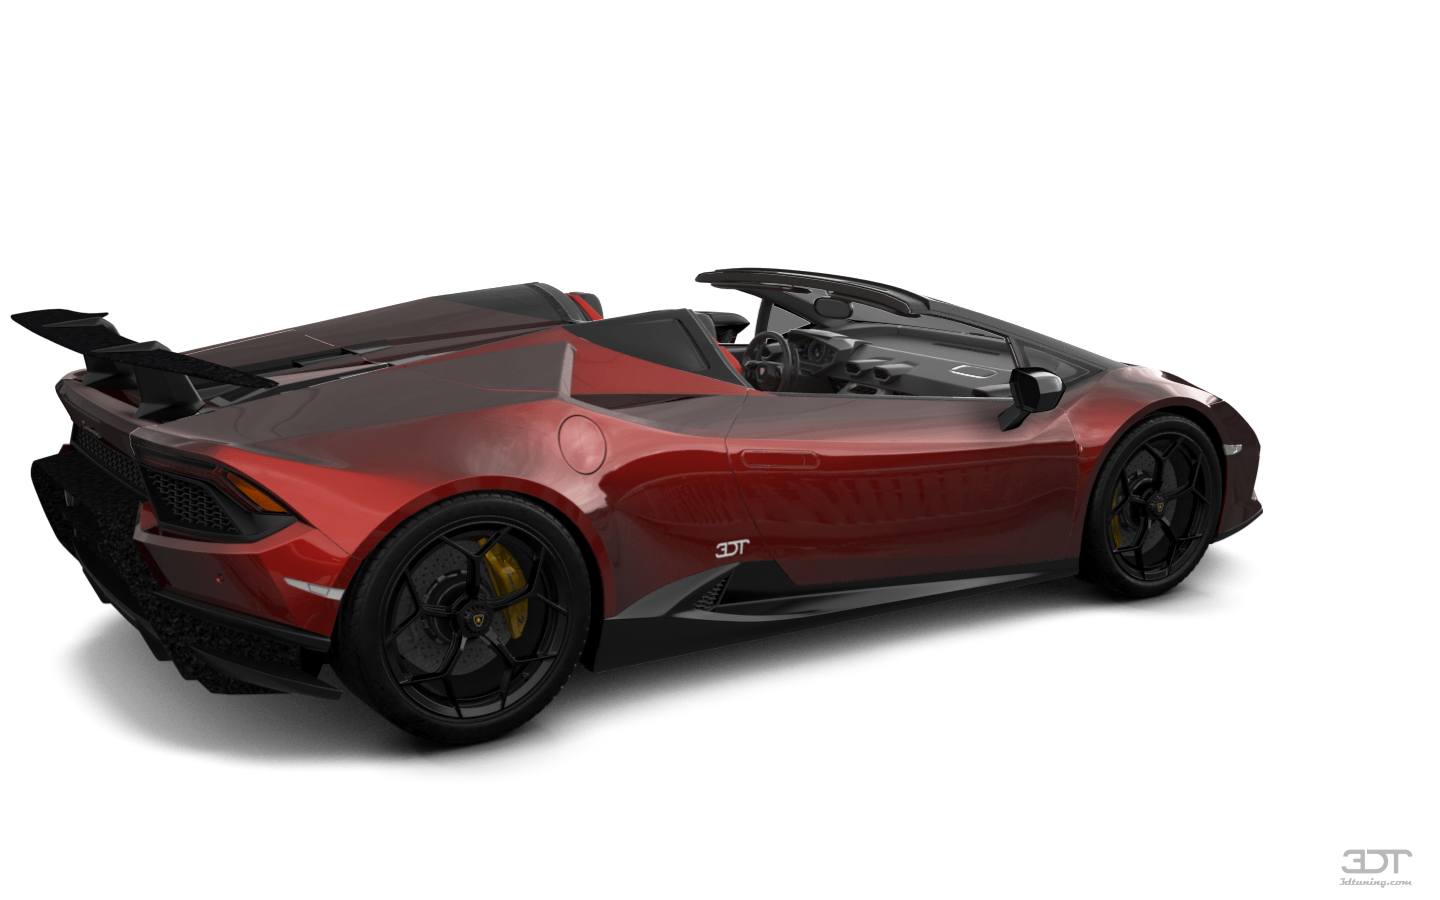 Lamborghini Huracan Spyder 2 Door Convertible 2016 tuning